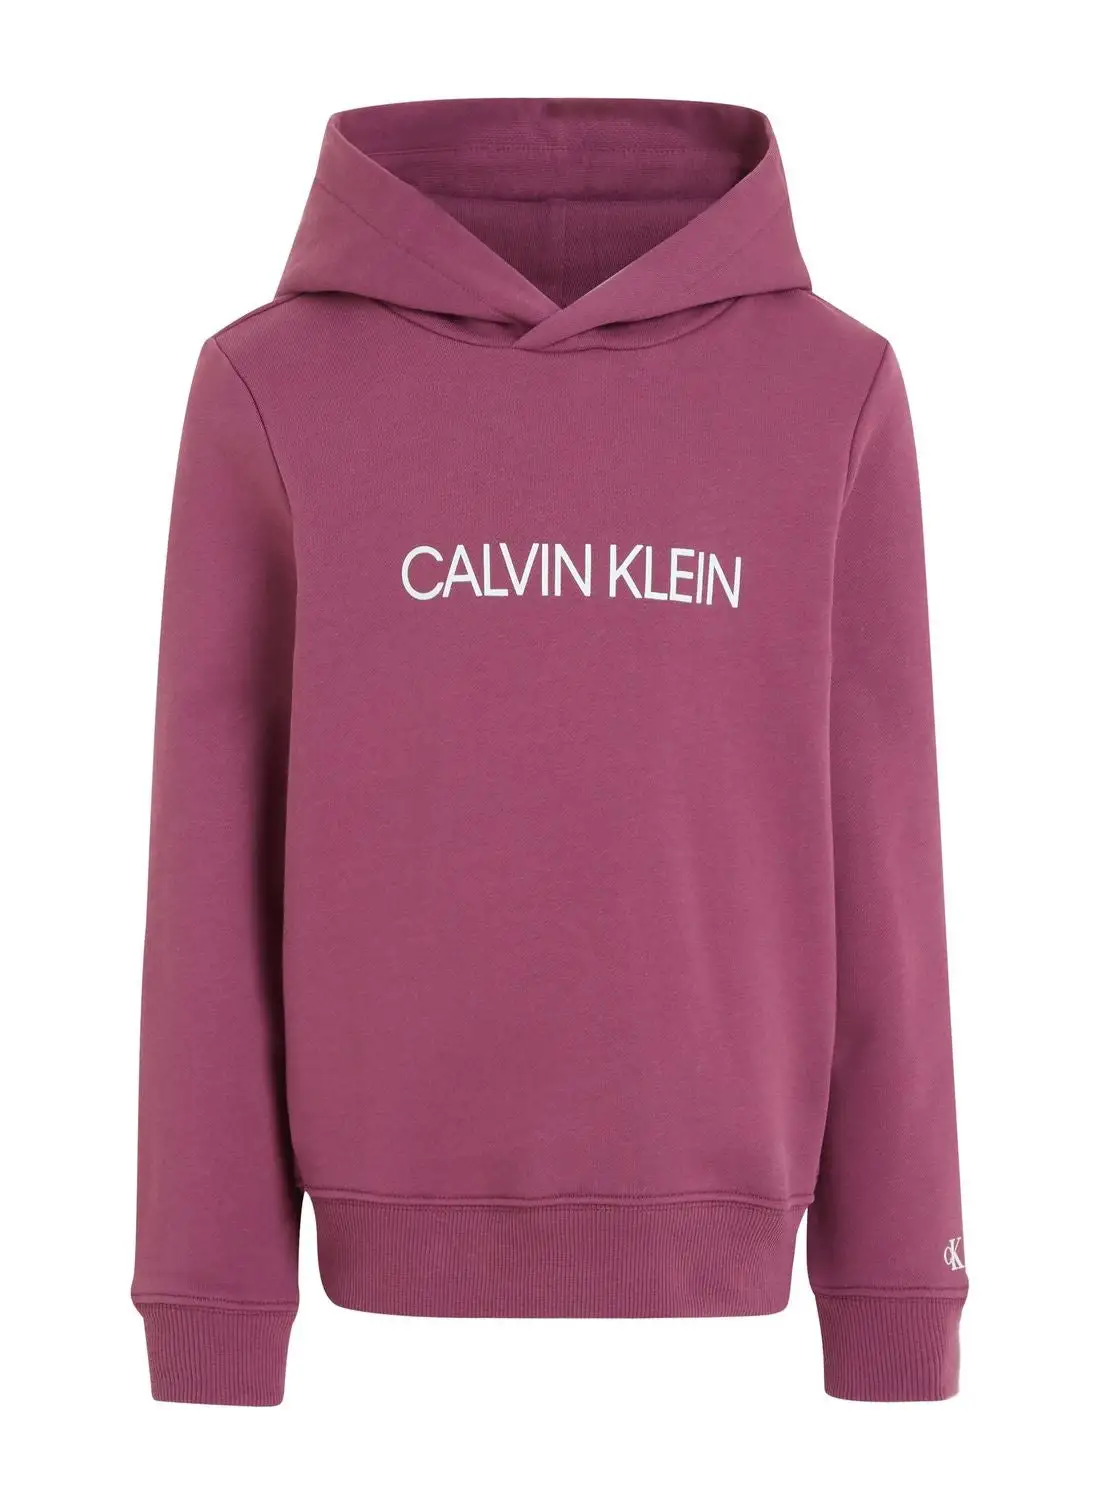 Calvin Klein Jeans Kids Logo Hoodie